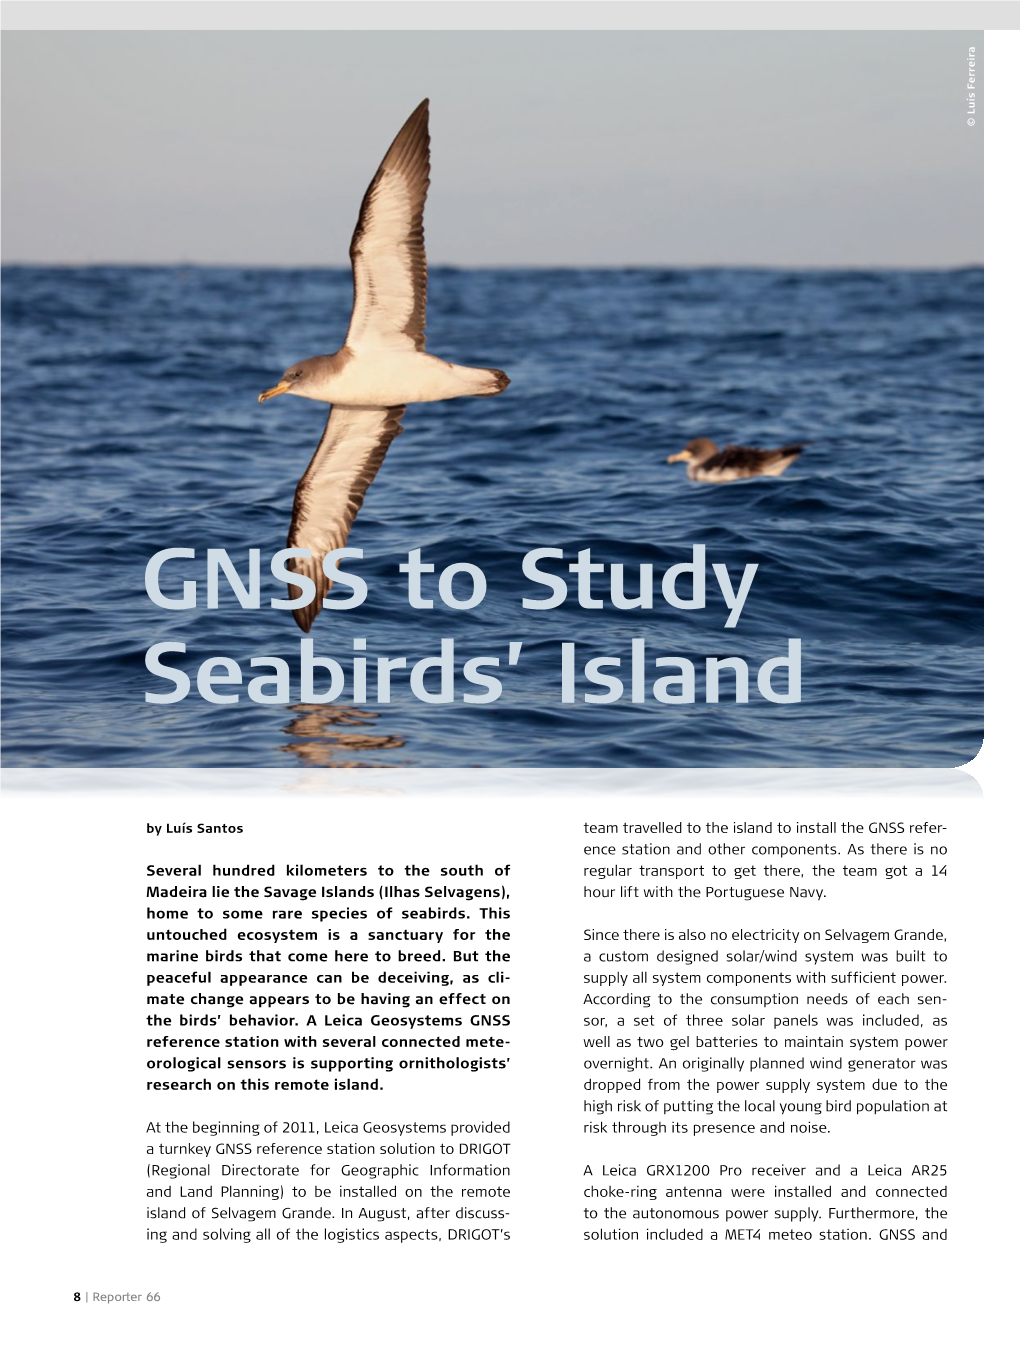 GNSS to Study Seabirds' Island